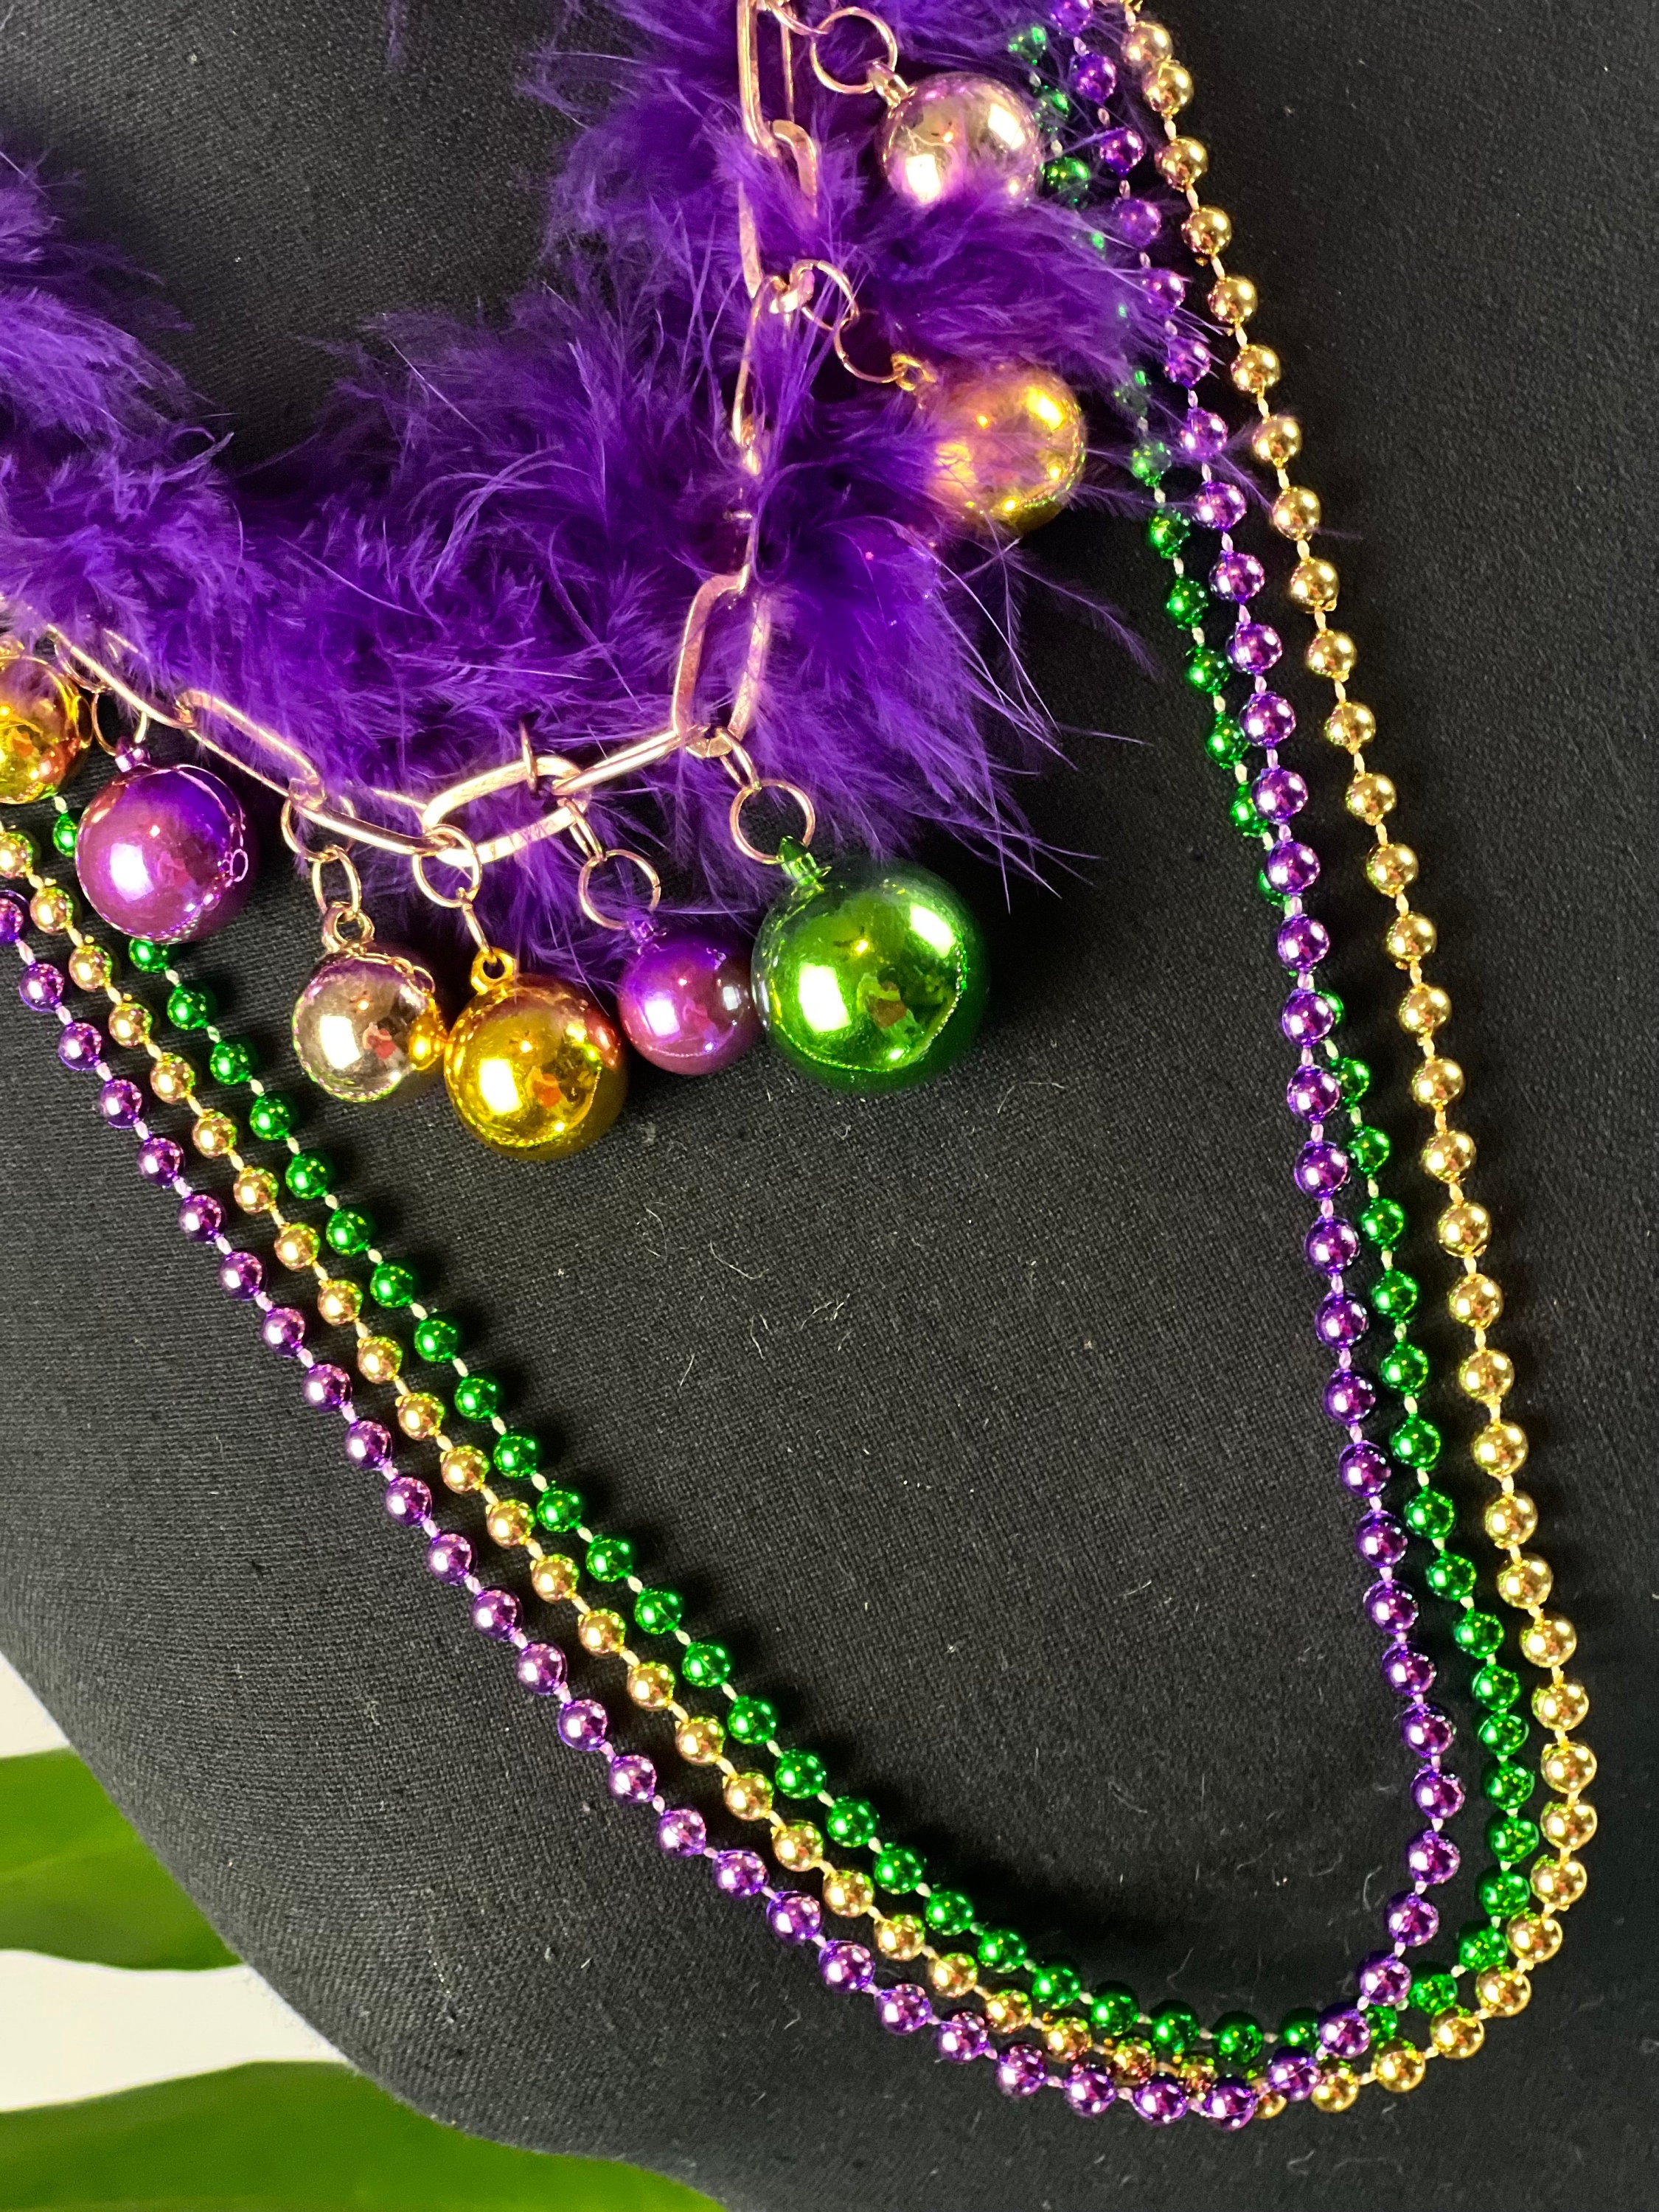 MARDI GRAS Beads Necklaces Assorted Authentic New Orleans Souvenir Lot of  25 